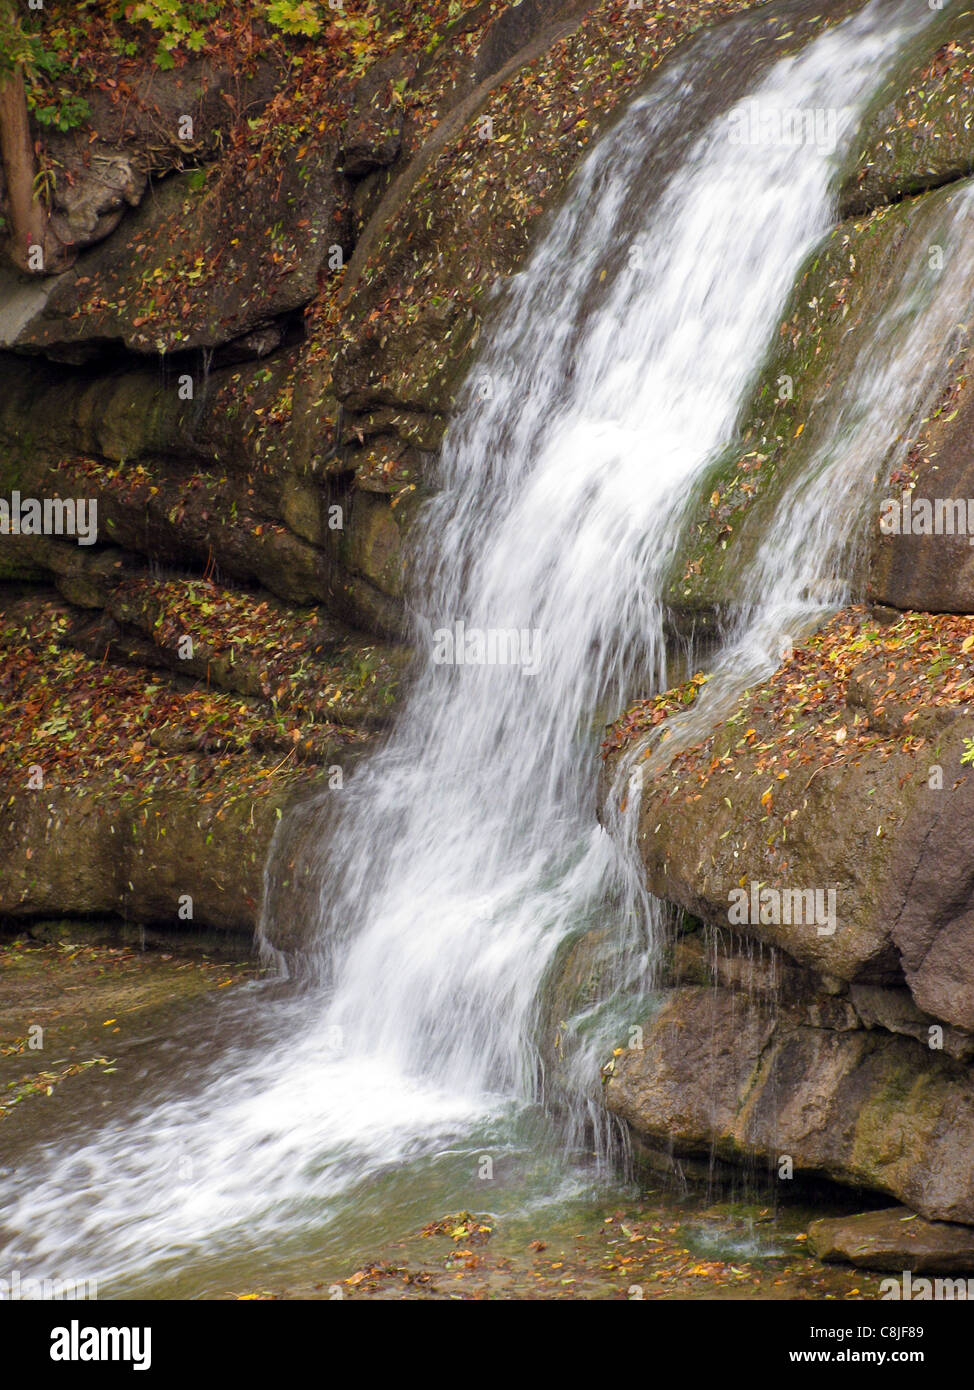 cascade in an autumnal park Stock Photo